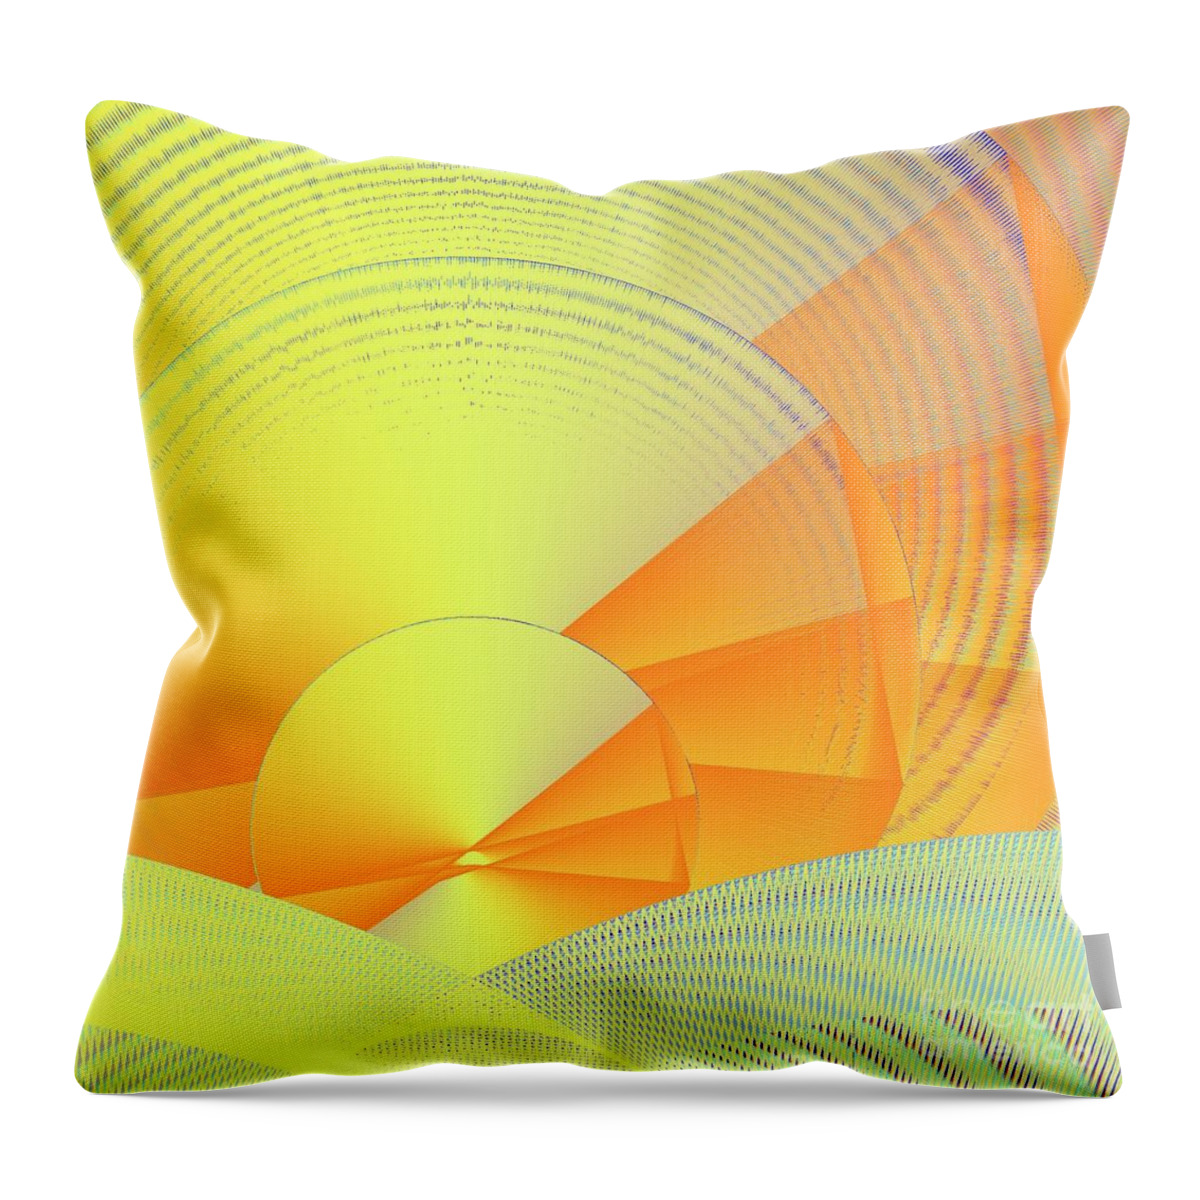 Digital Daylight Throw Pillow featuring the digital art Digital Daylight by Michael Skinner